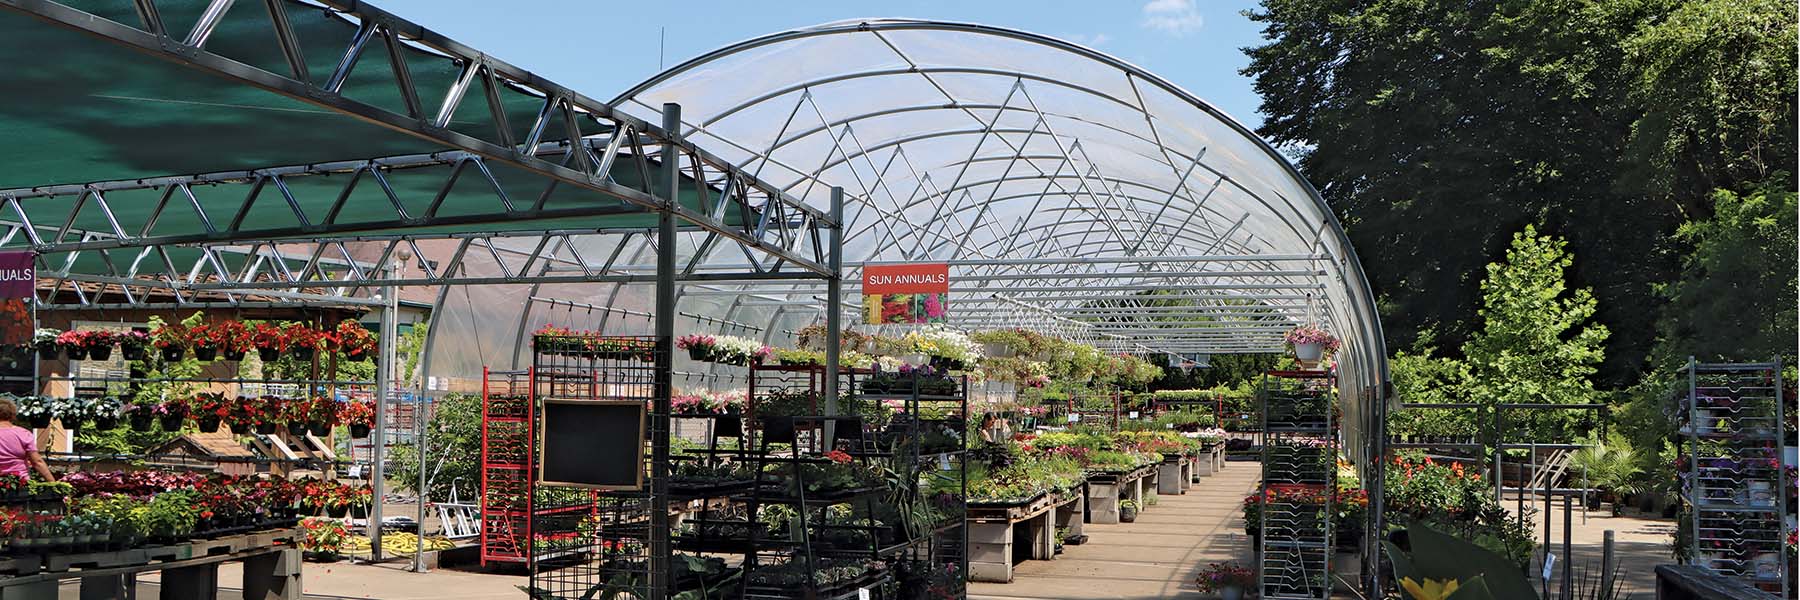 vegetable greenhouse growing